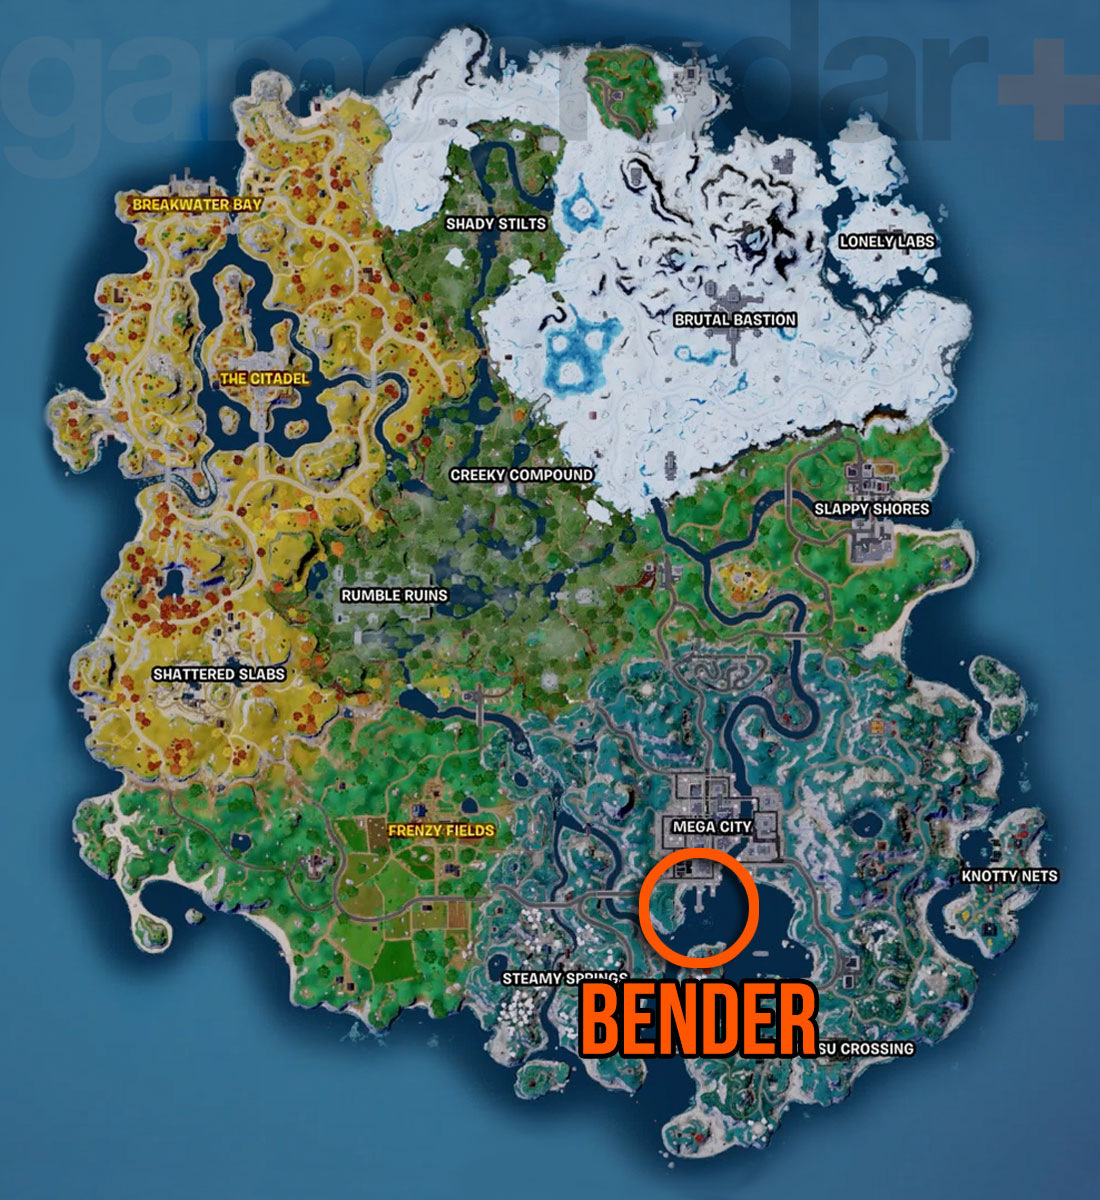 Var du hittar Bender i Fortnite visas på kartan